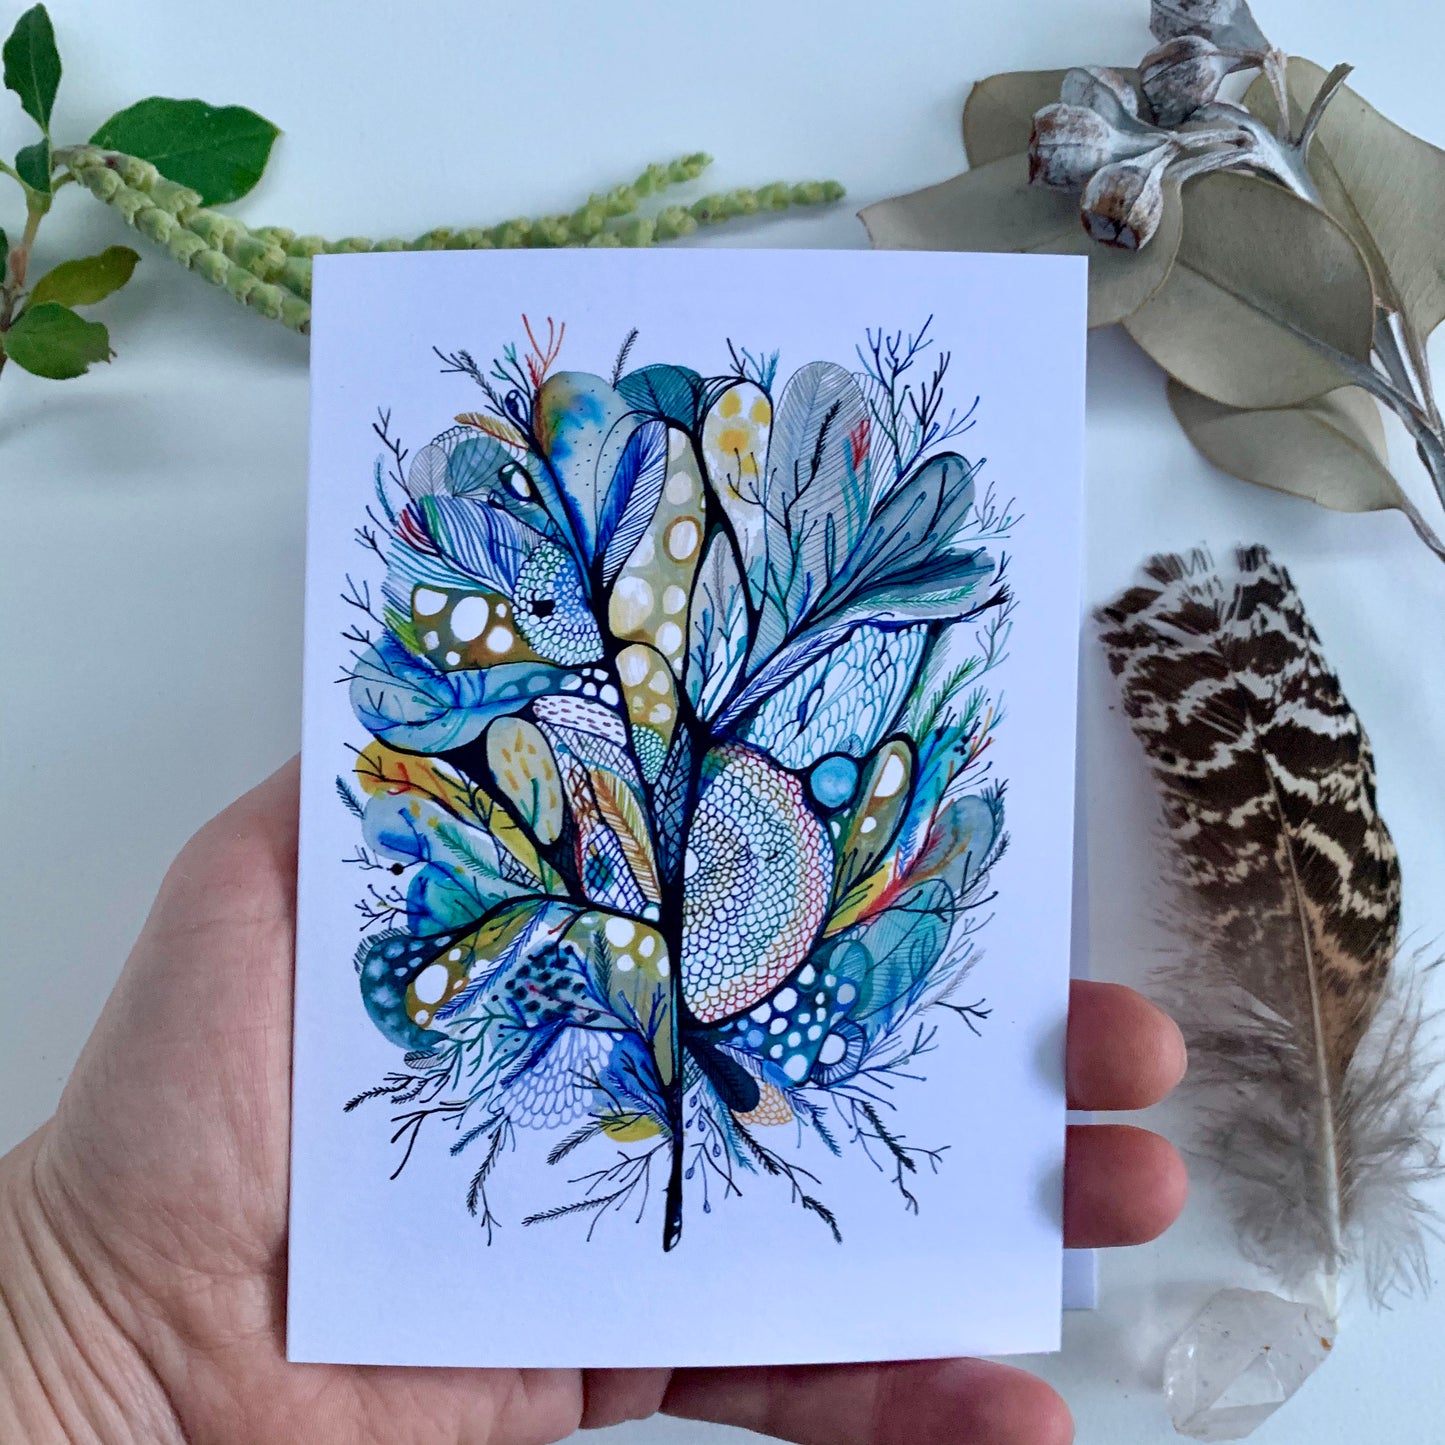 ‘Seaweed study, blue’ greeting card